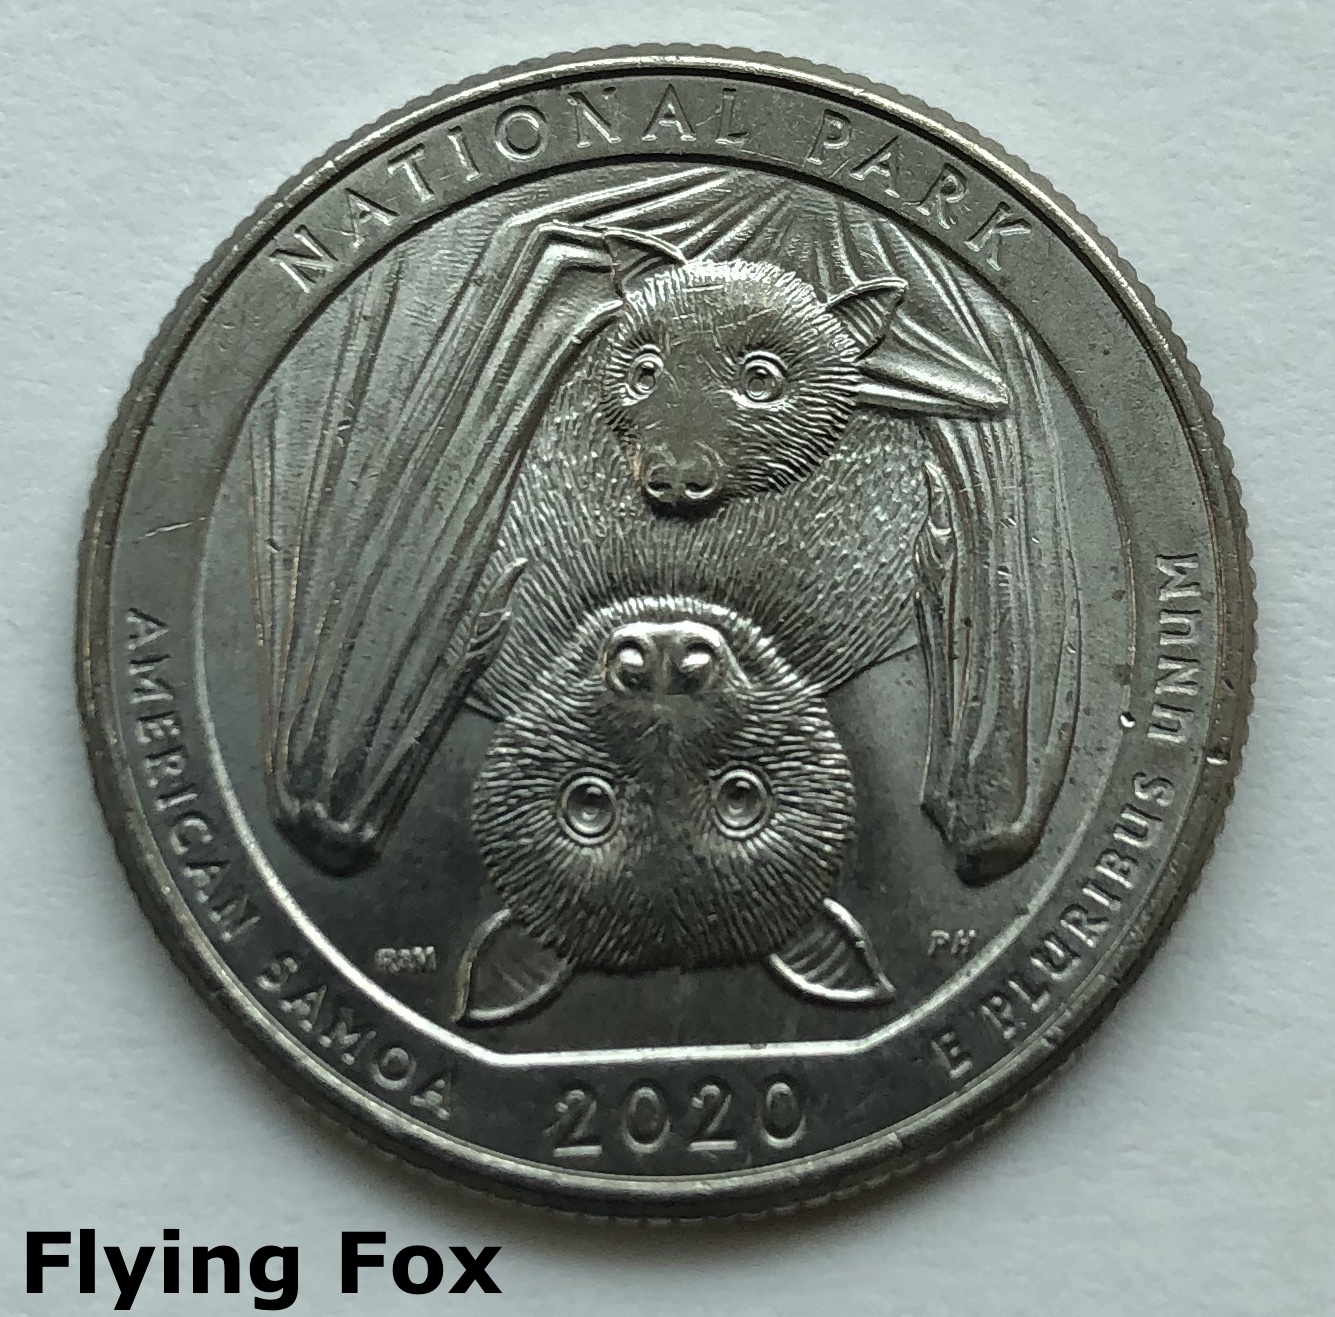 American Samoa flying fox on a quarter